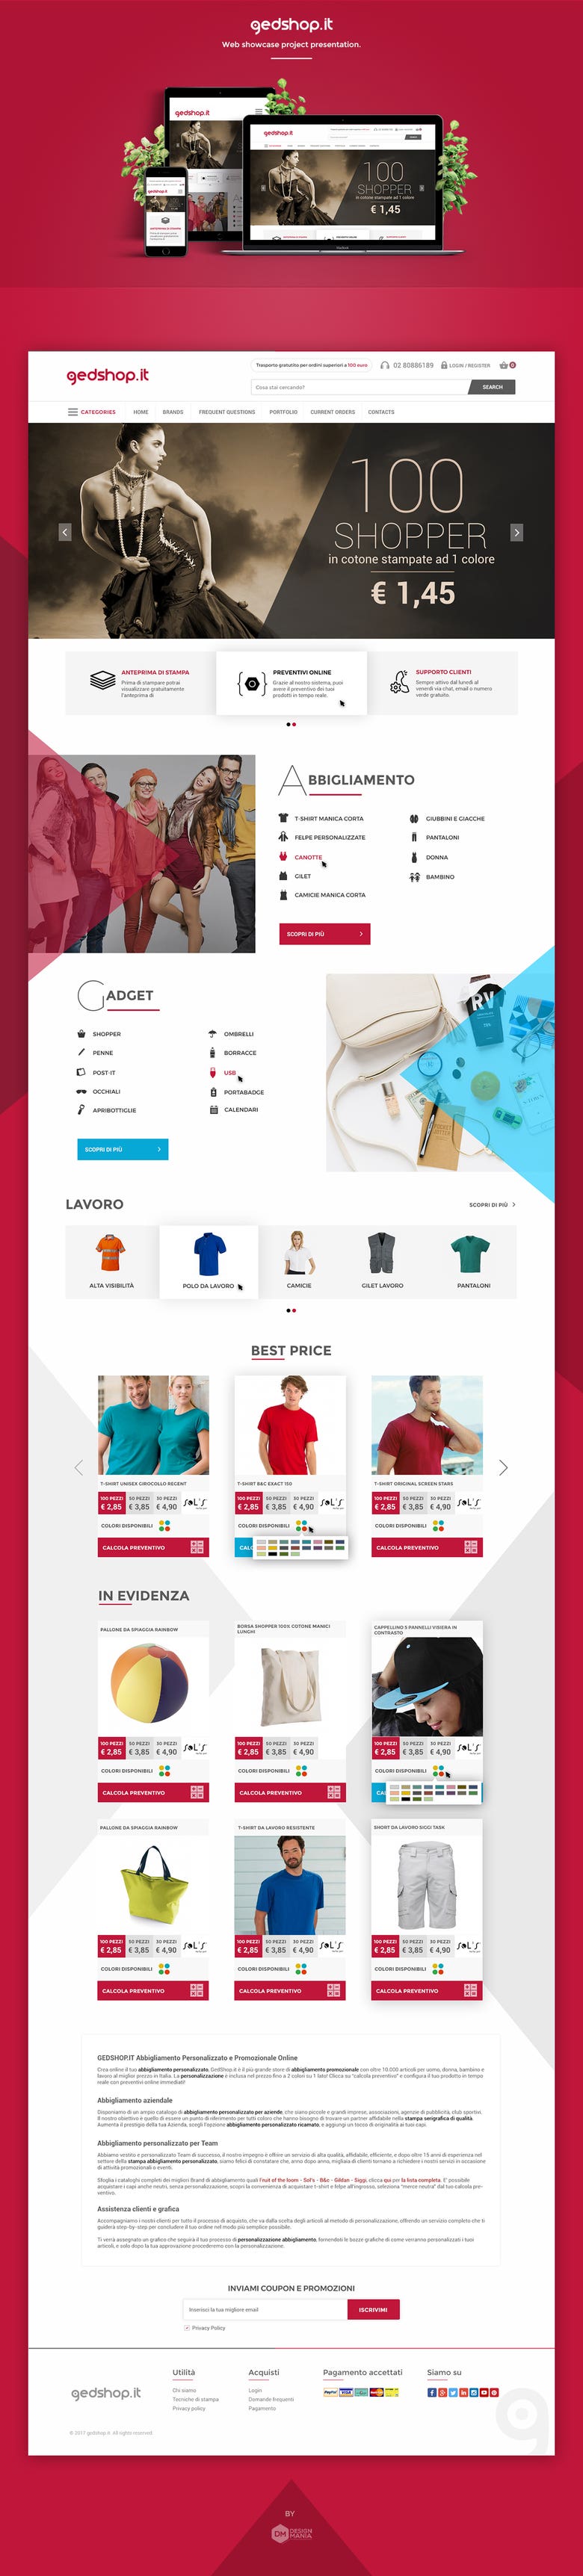 Ecommerce website home page design